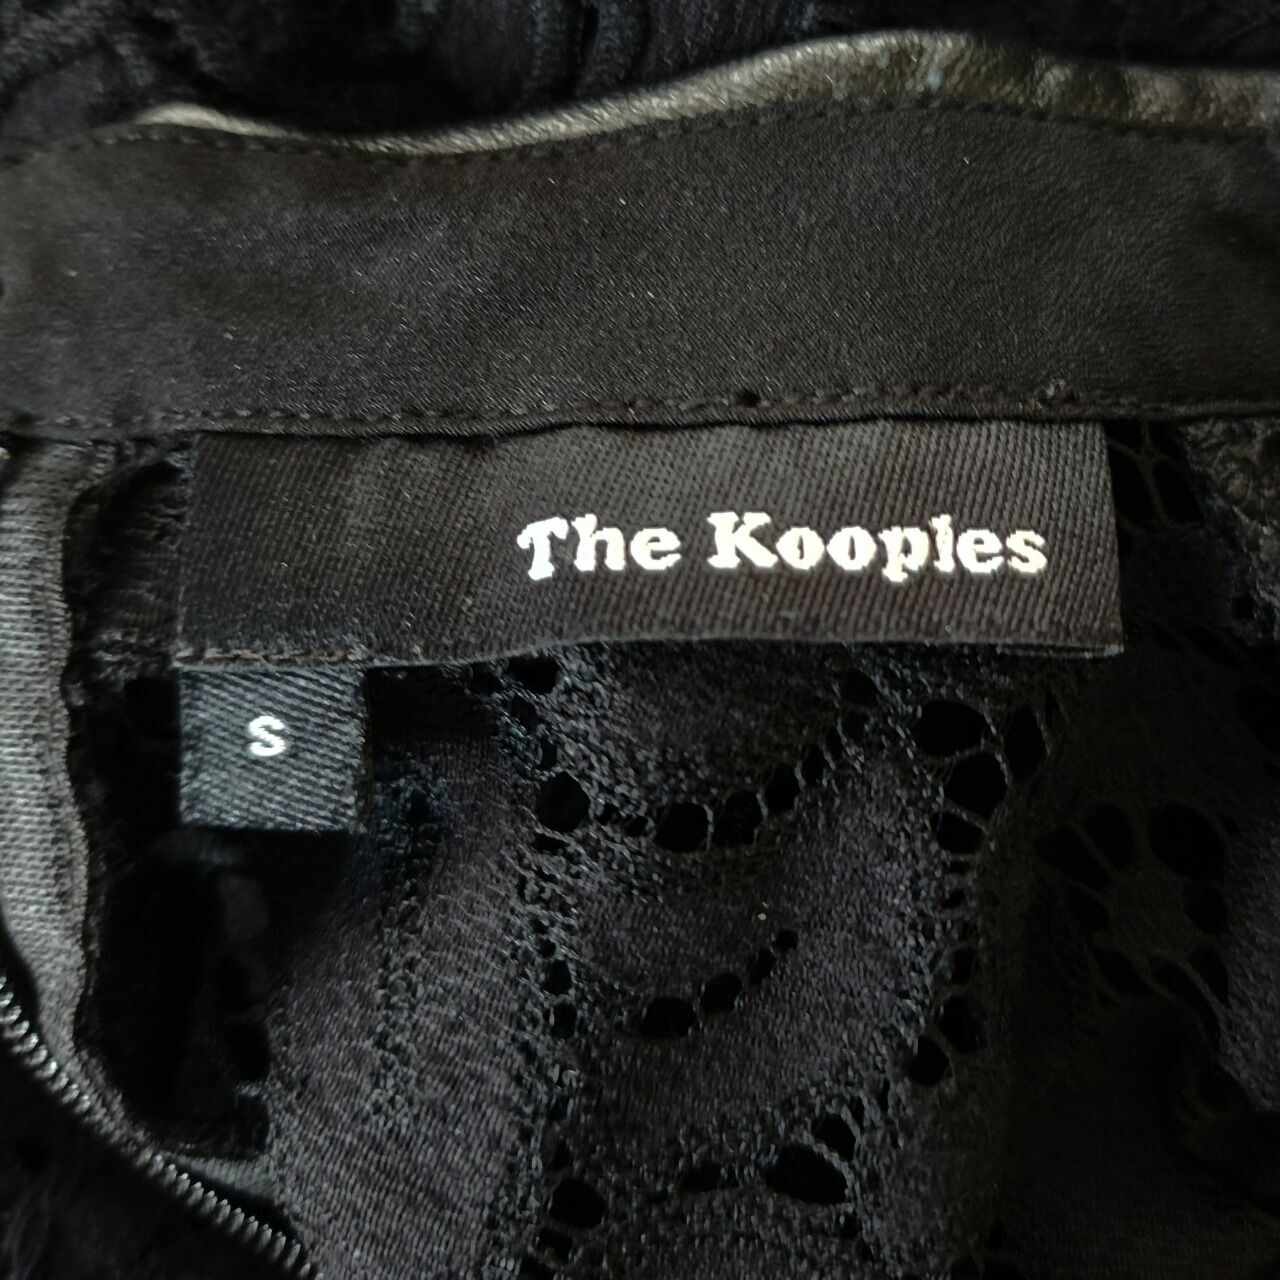 The Kooples Black Lace Blouse